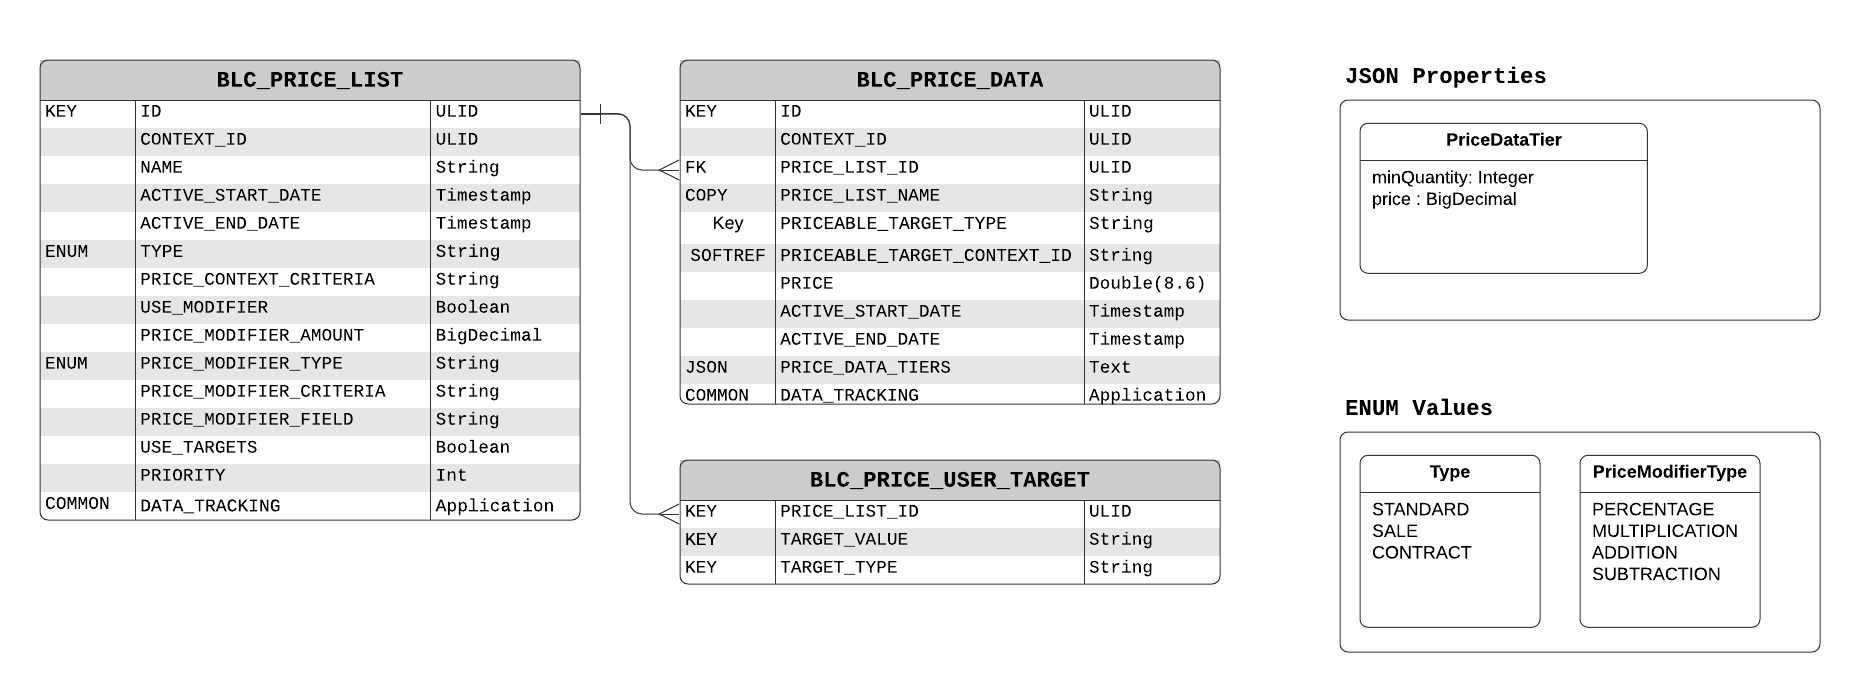 Pricing Data Model